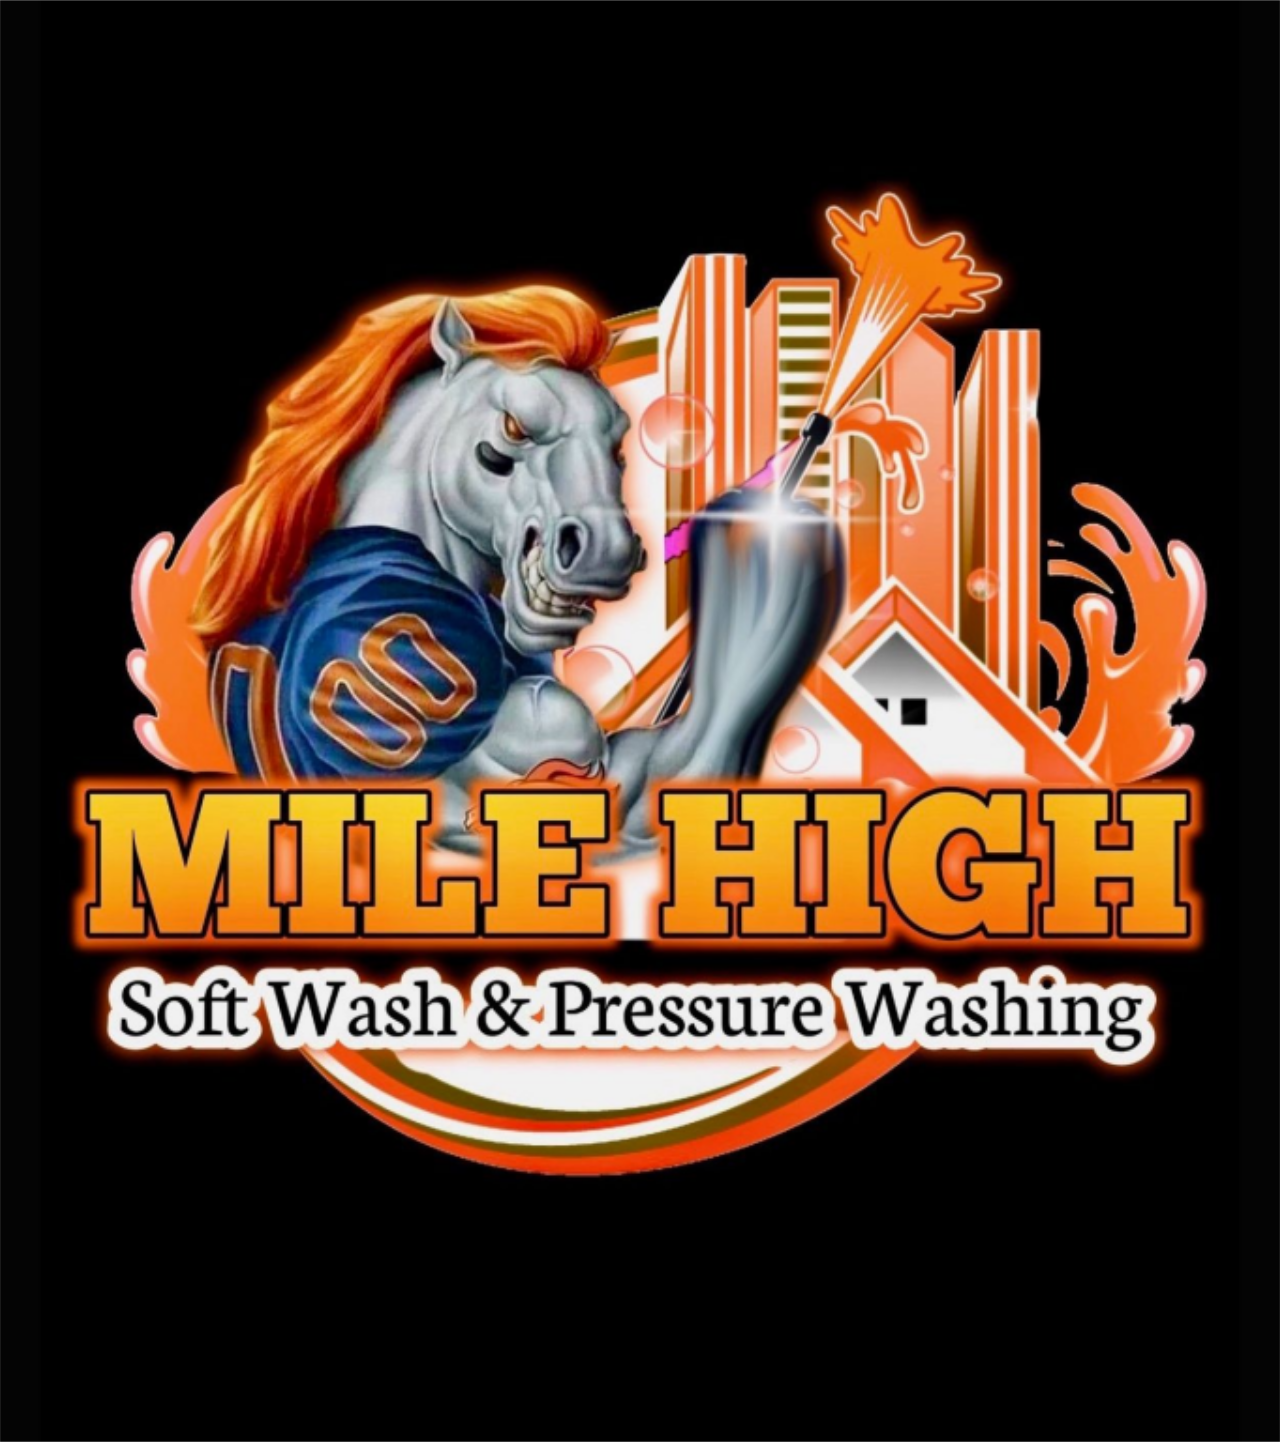 MILE HIGH 's logo